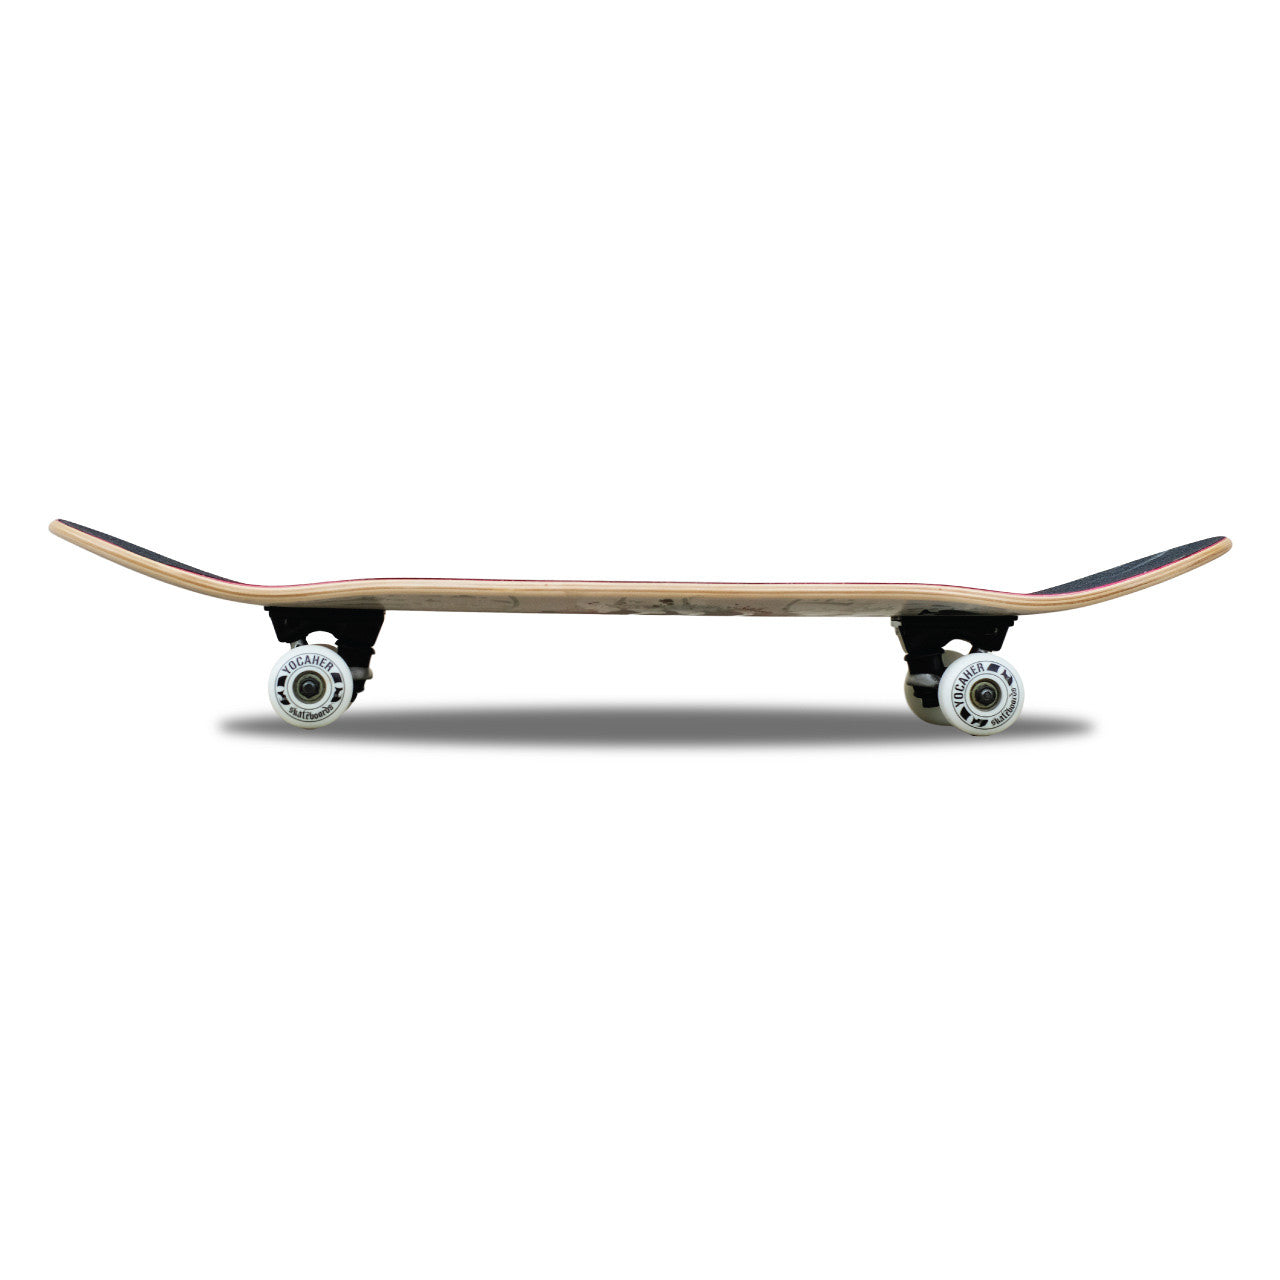 Yocaher Complete Skateboard 7.75"  - Camo